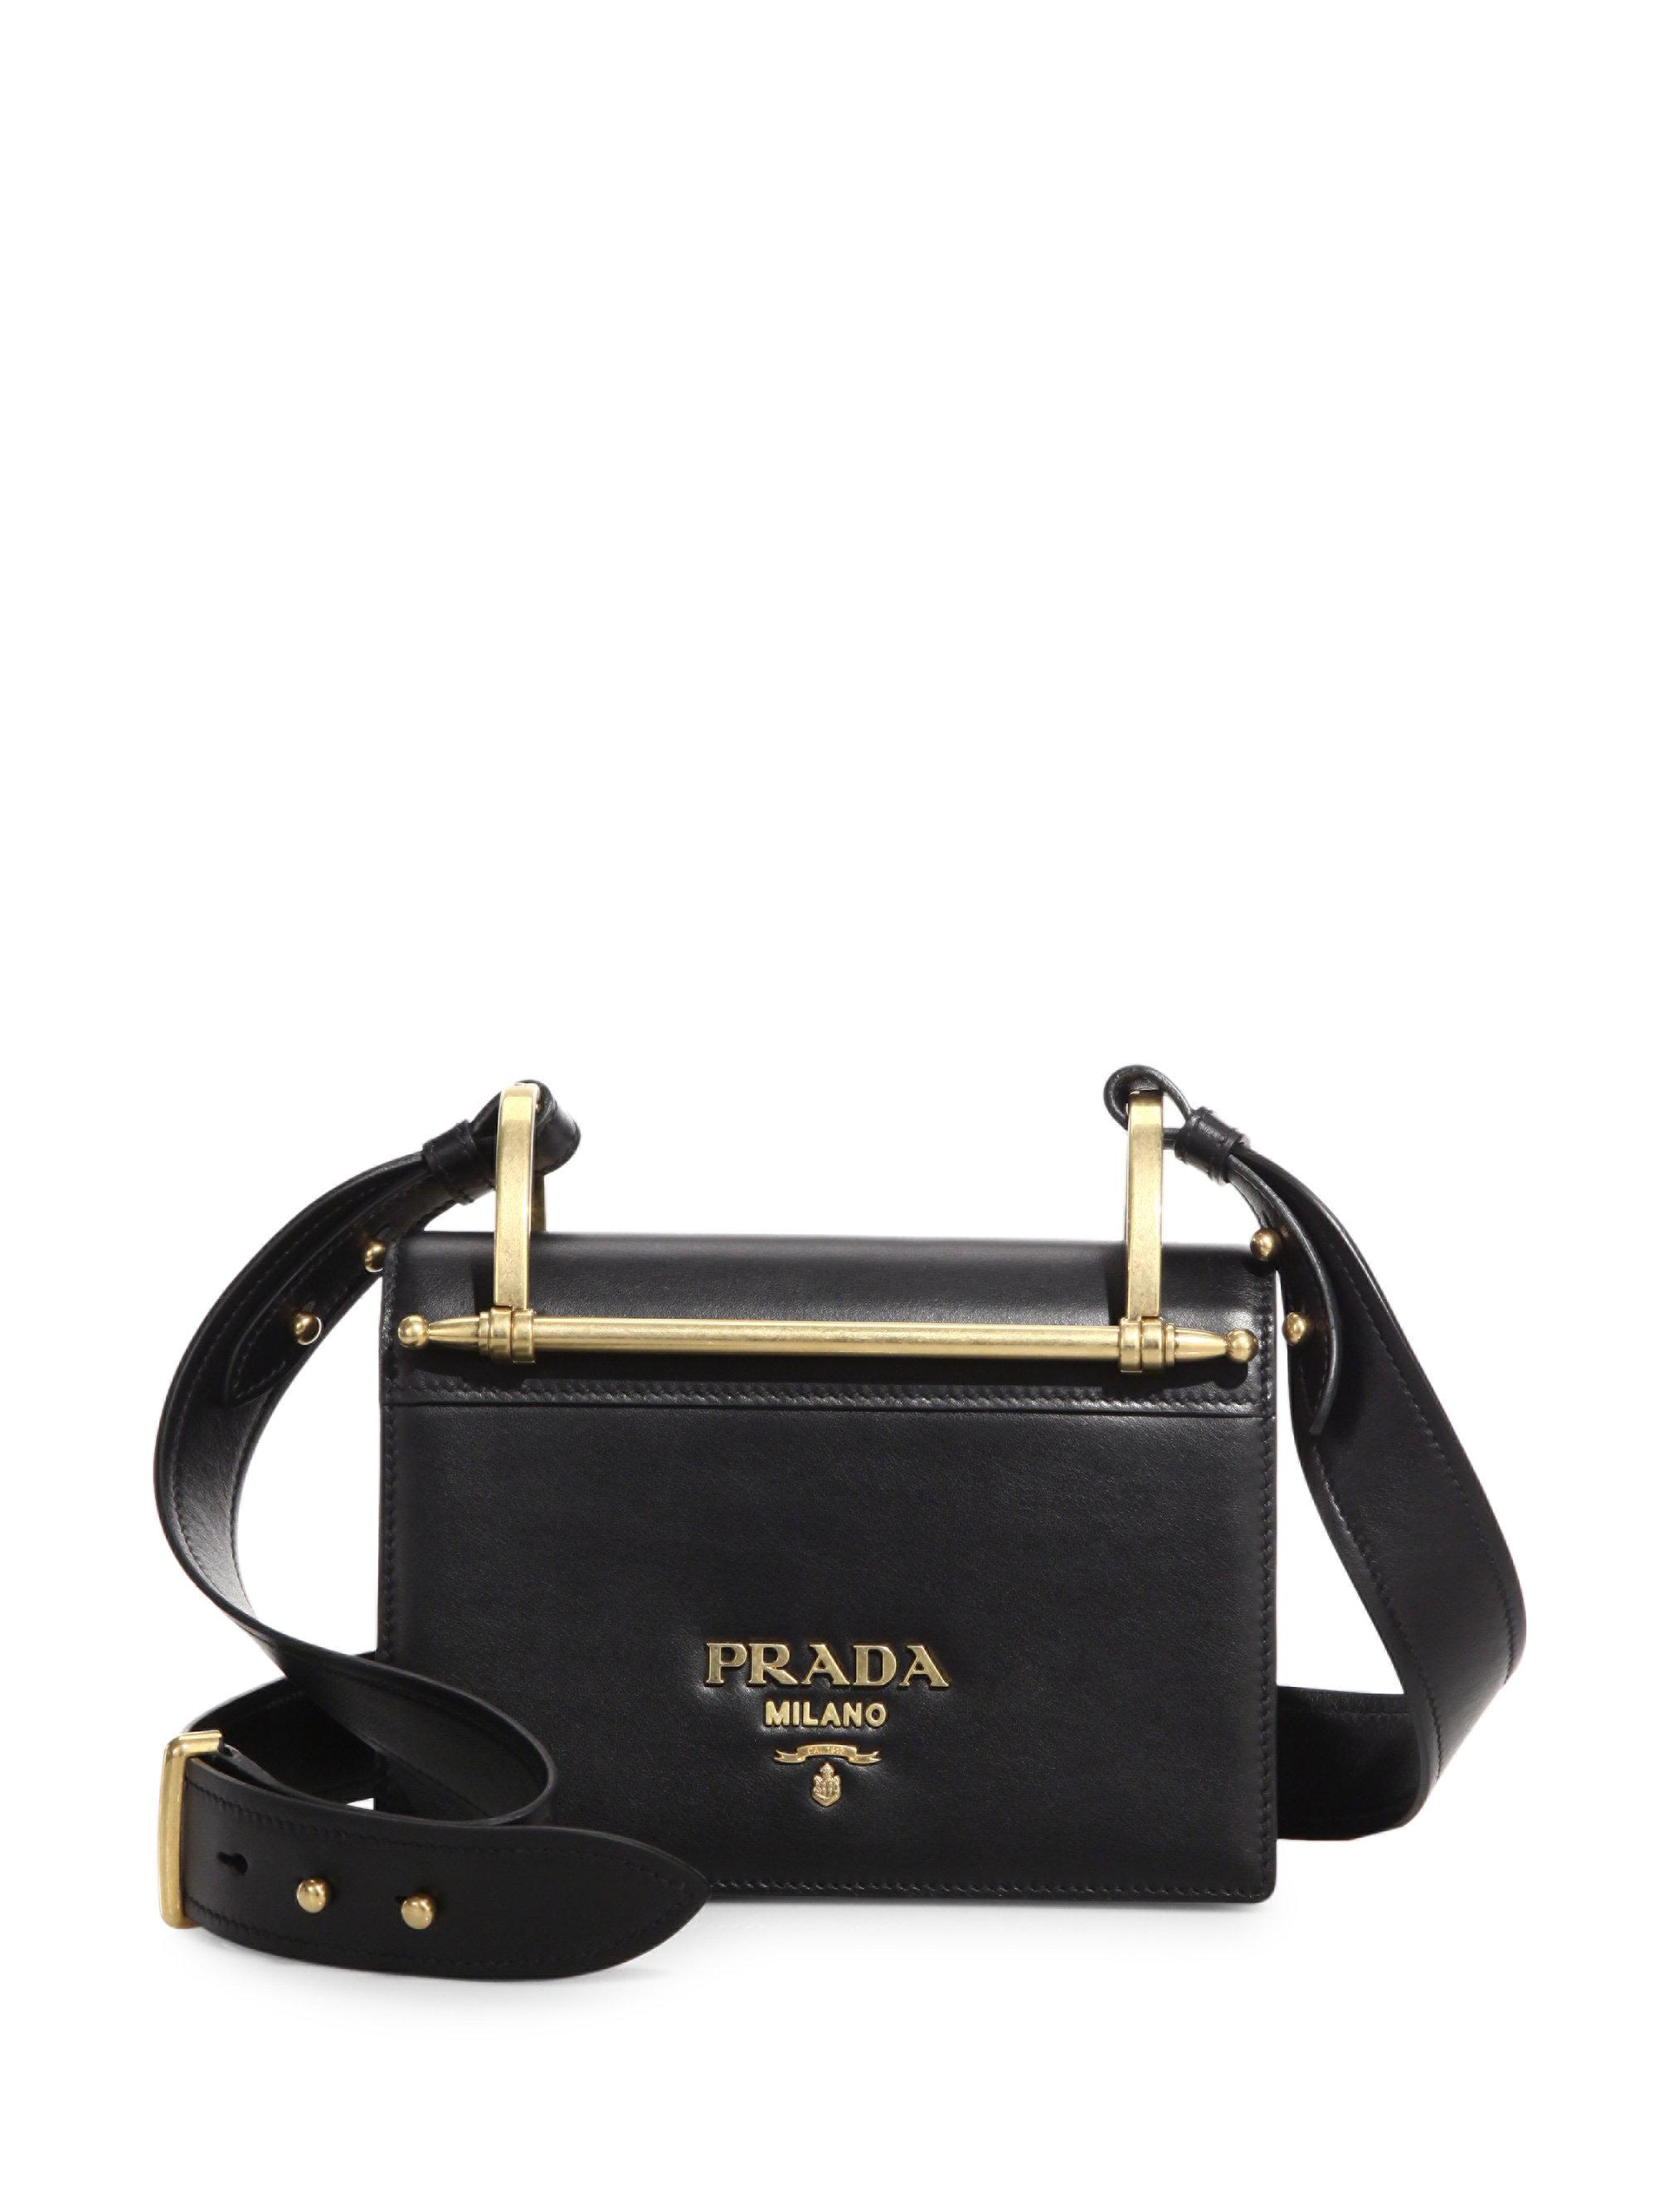 Prada Pattina Leather Shoulder Bag in 